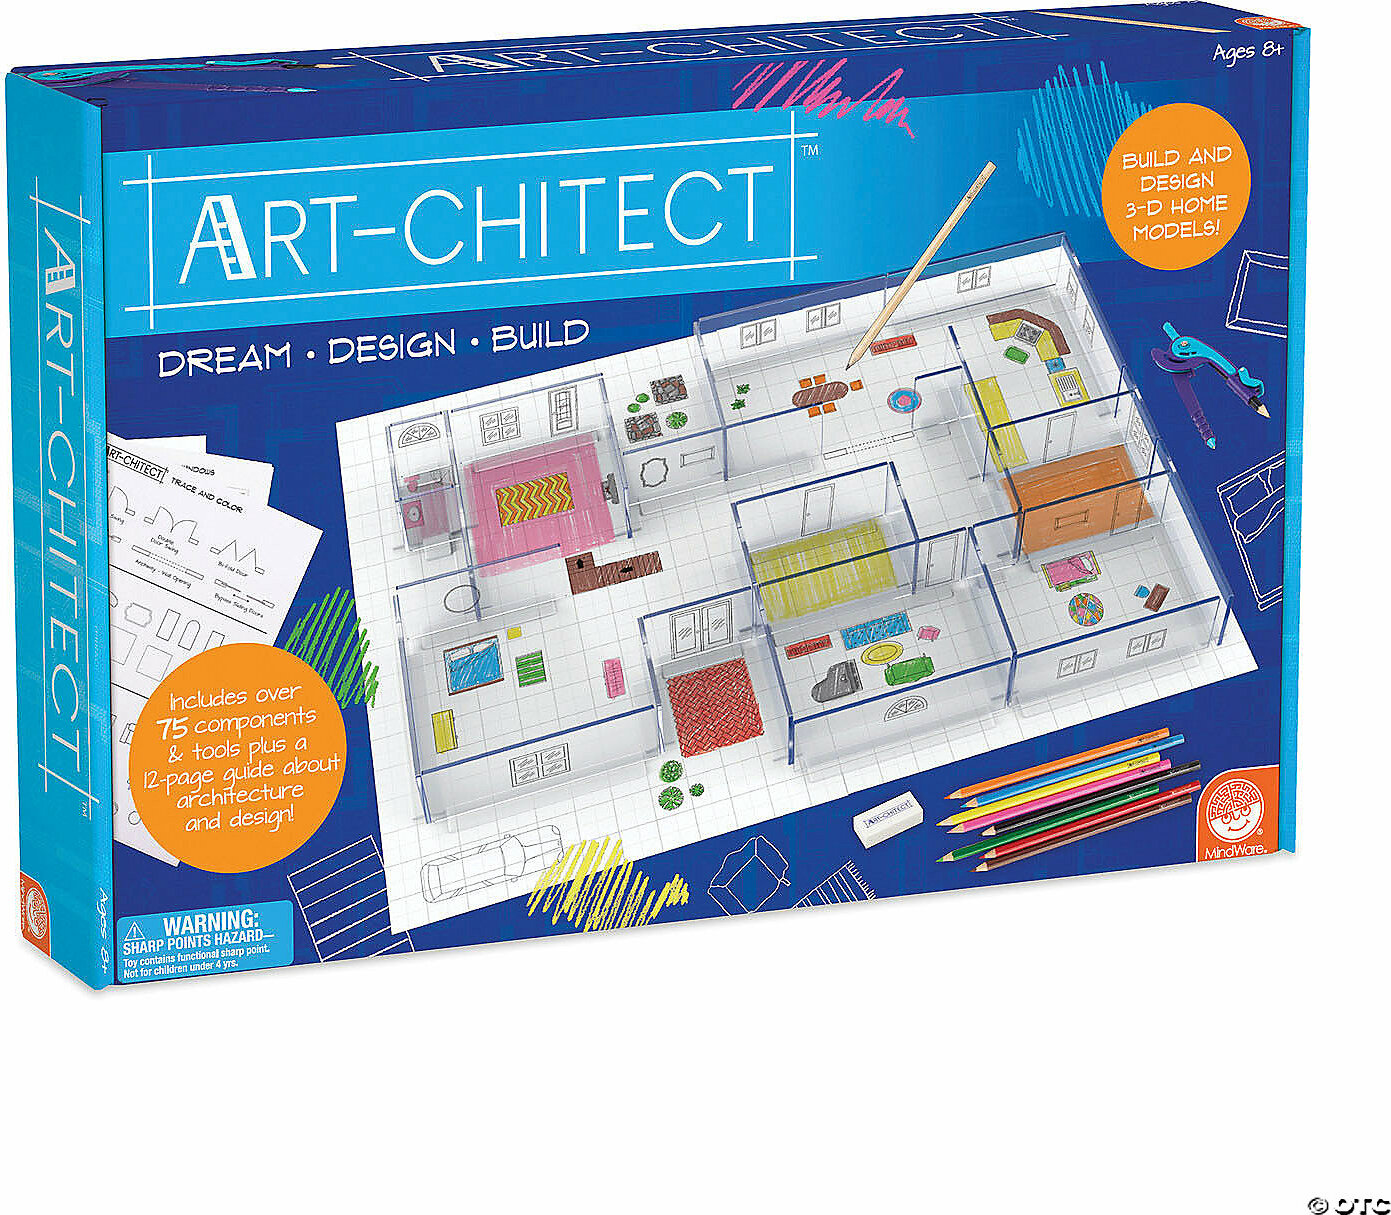 Art Chitect 3 D Home Design